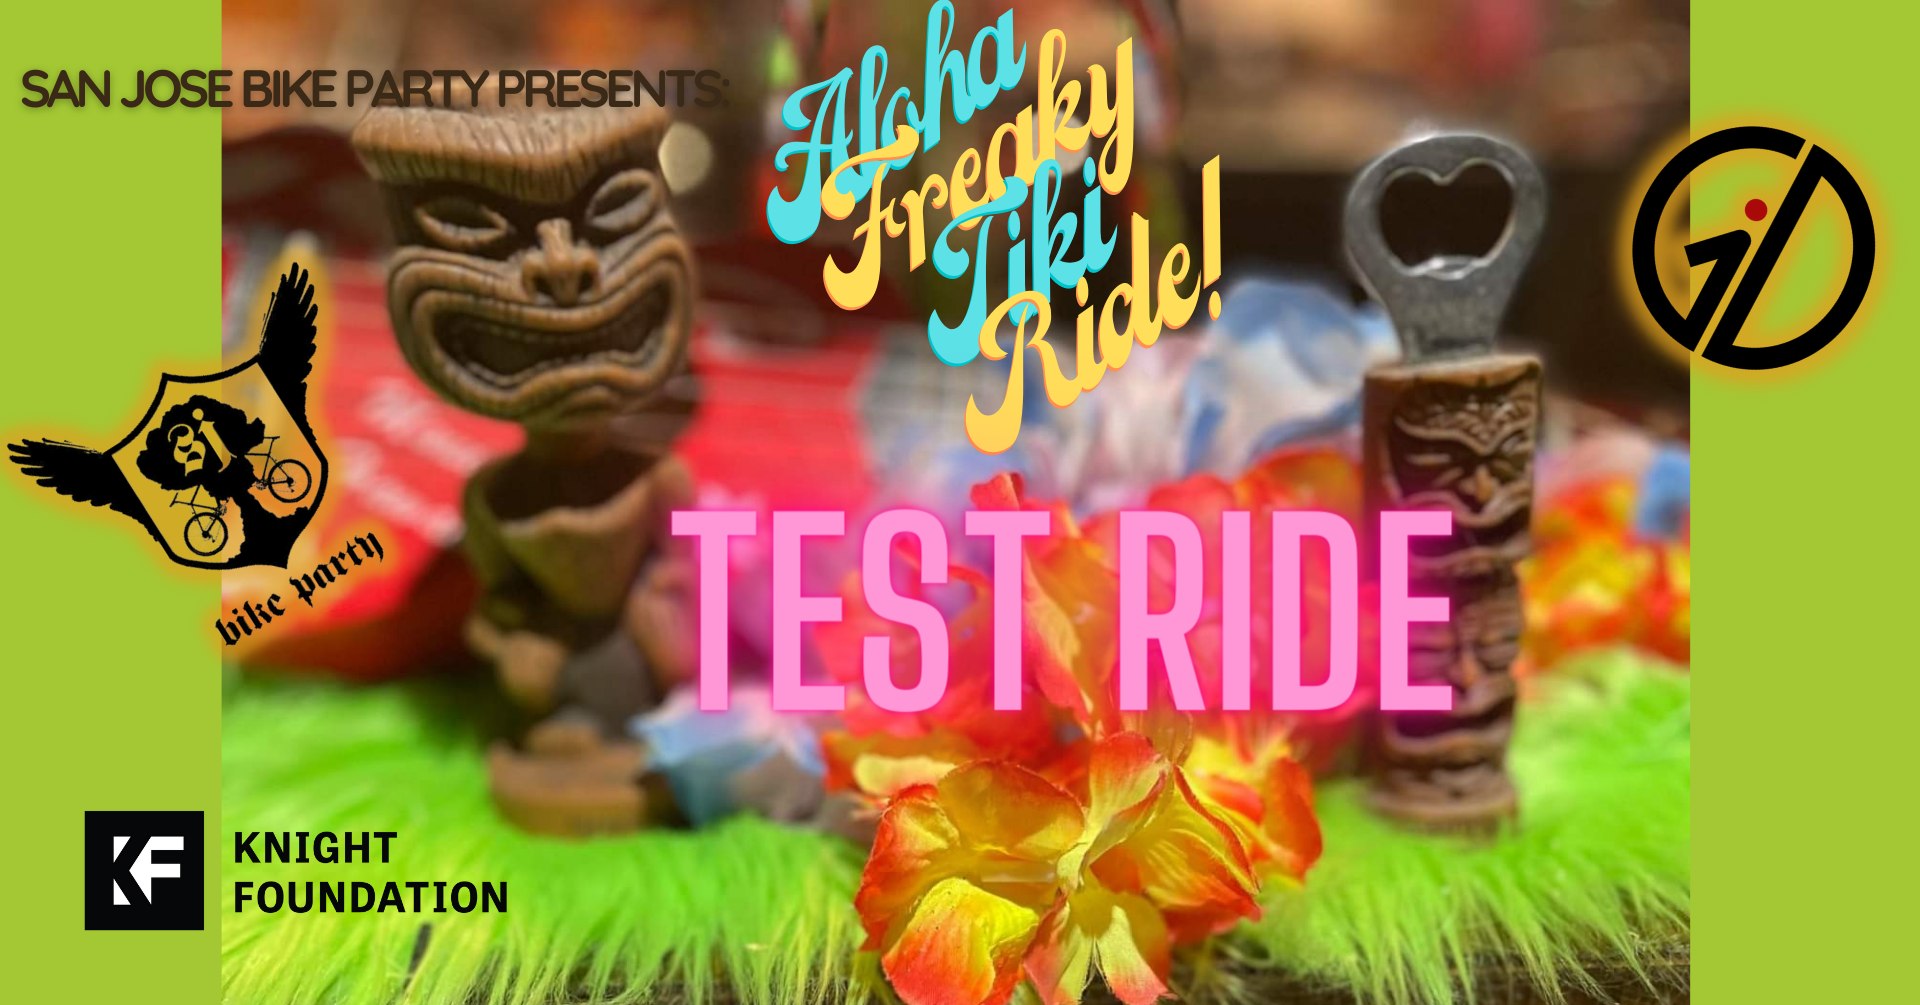 The Aloha Freaky Tiki Ride